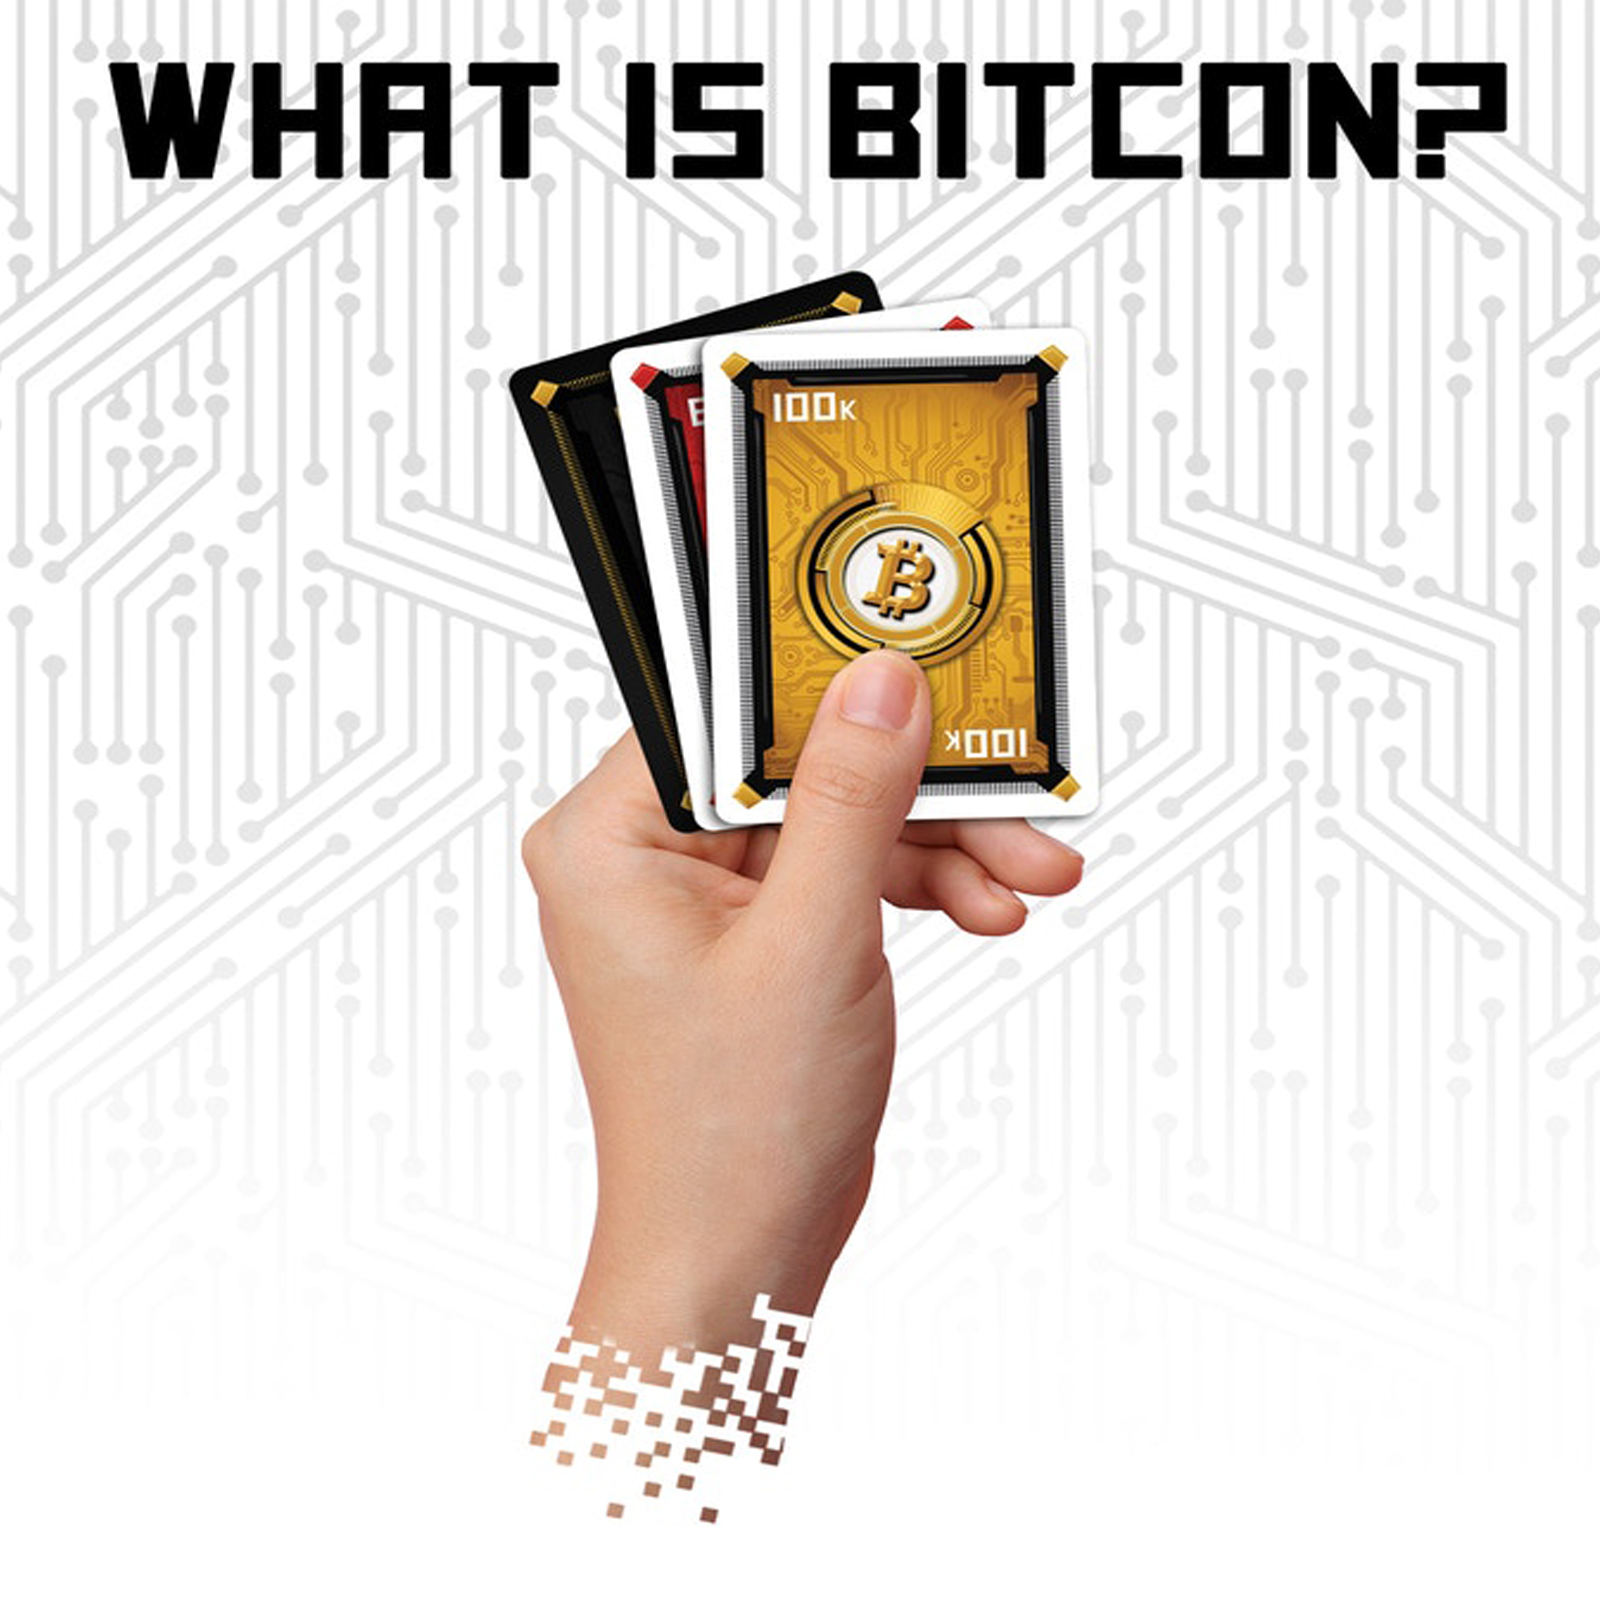 There's a Bitcoin Themed Card Game On Kickstarter Called 'Bitcon'